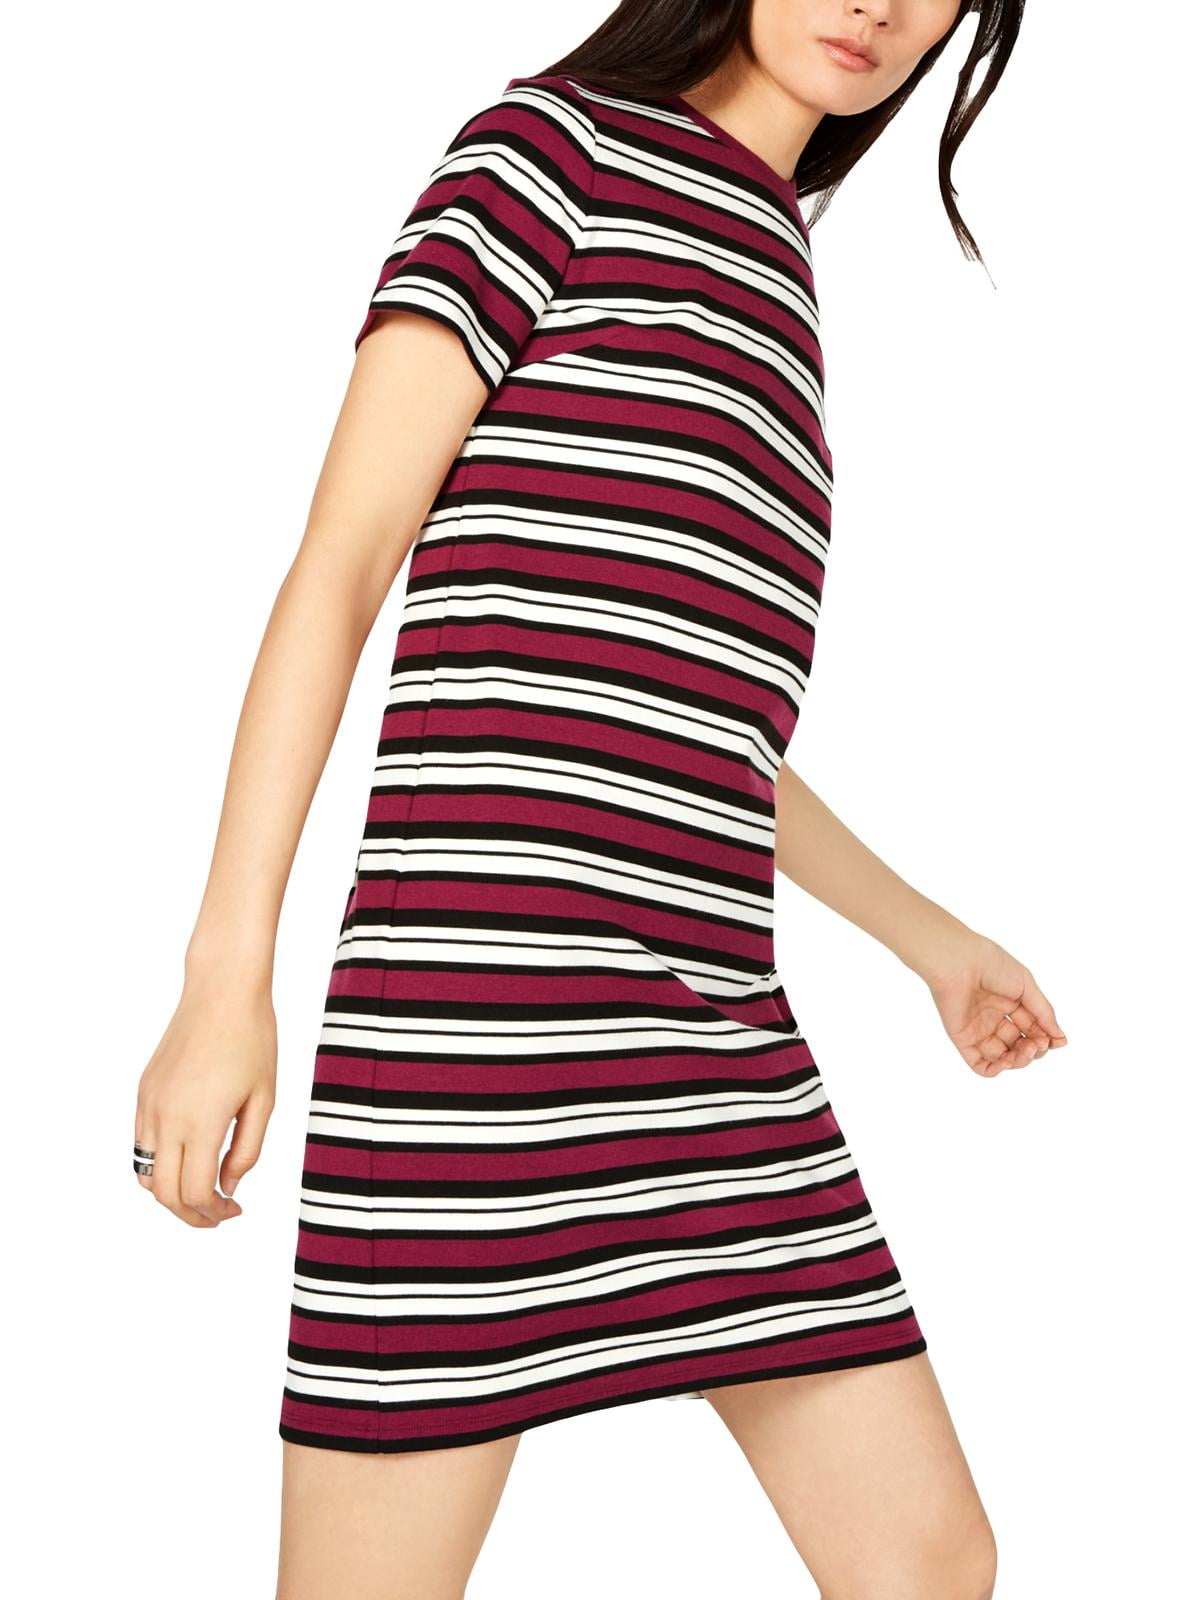 michael kors striped shirt dress